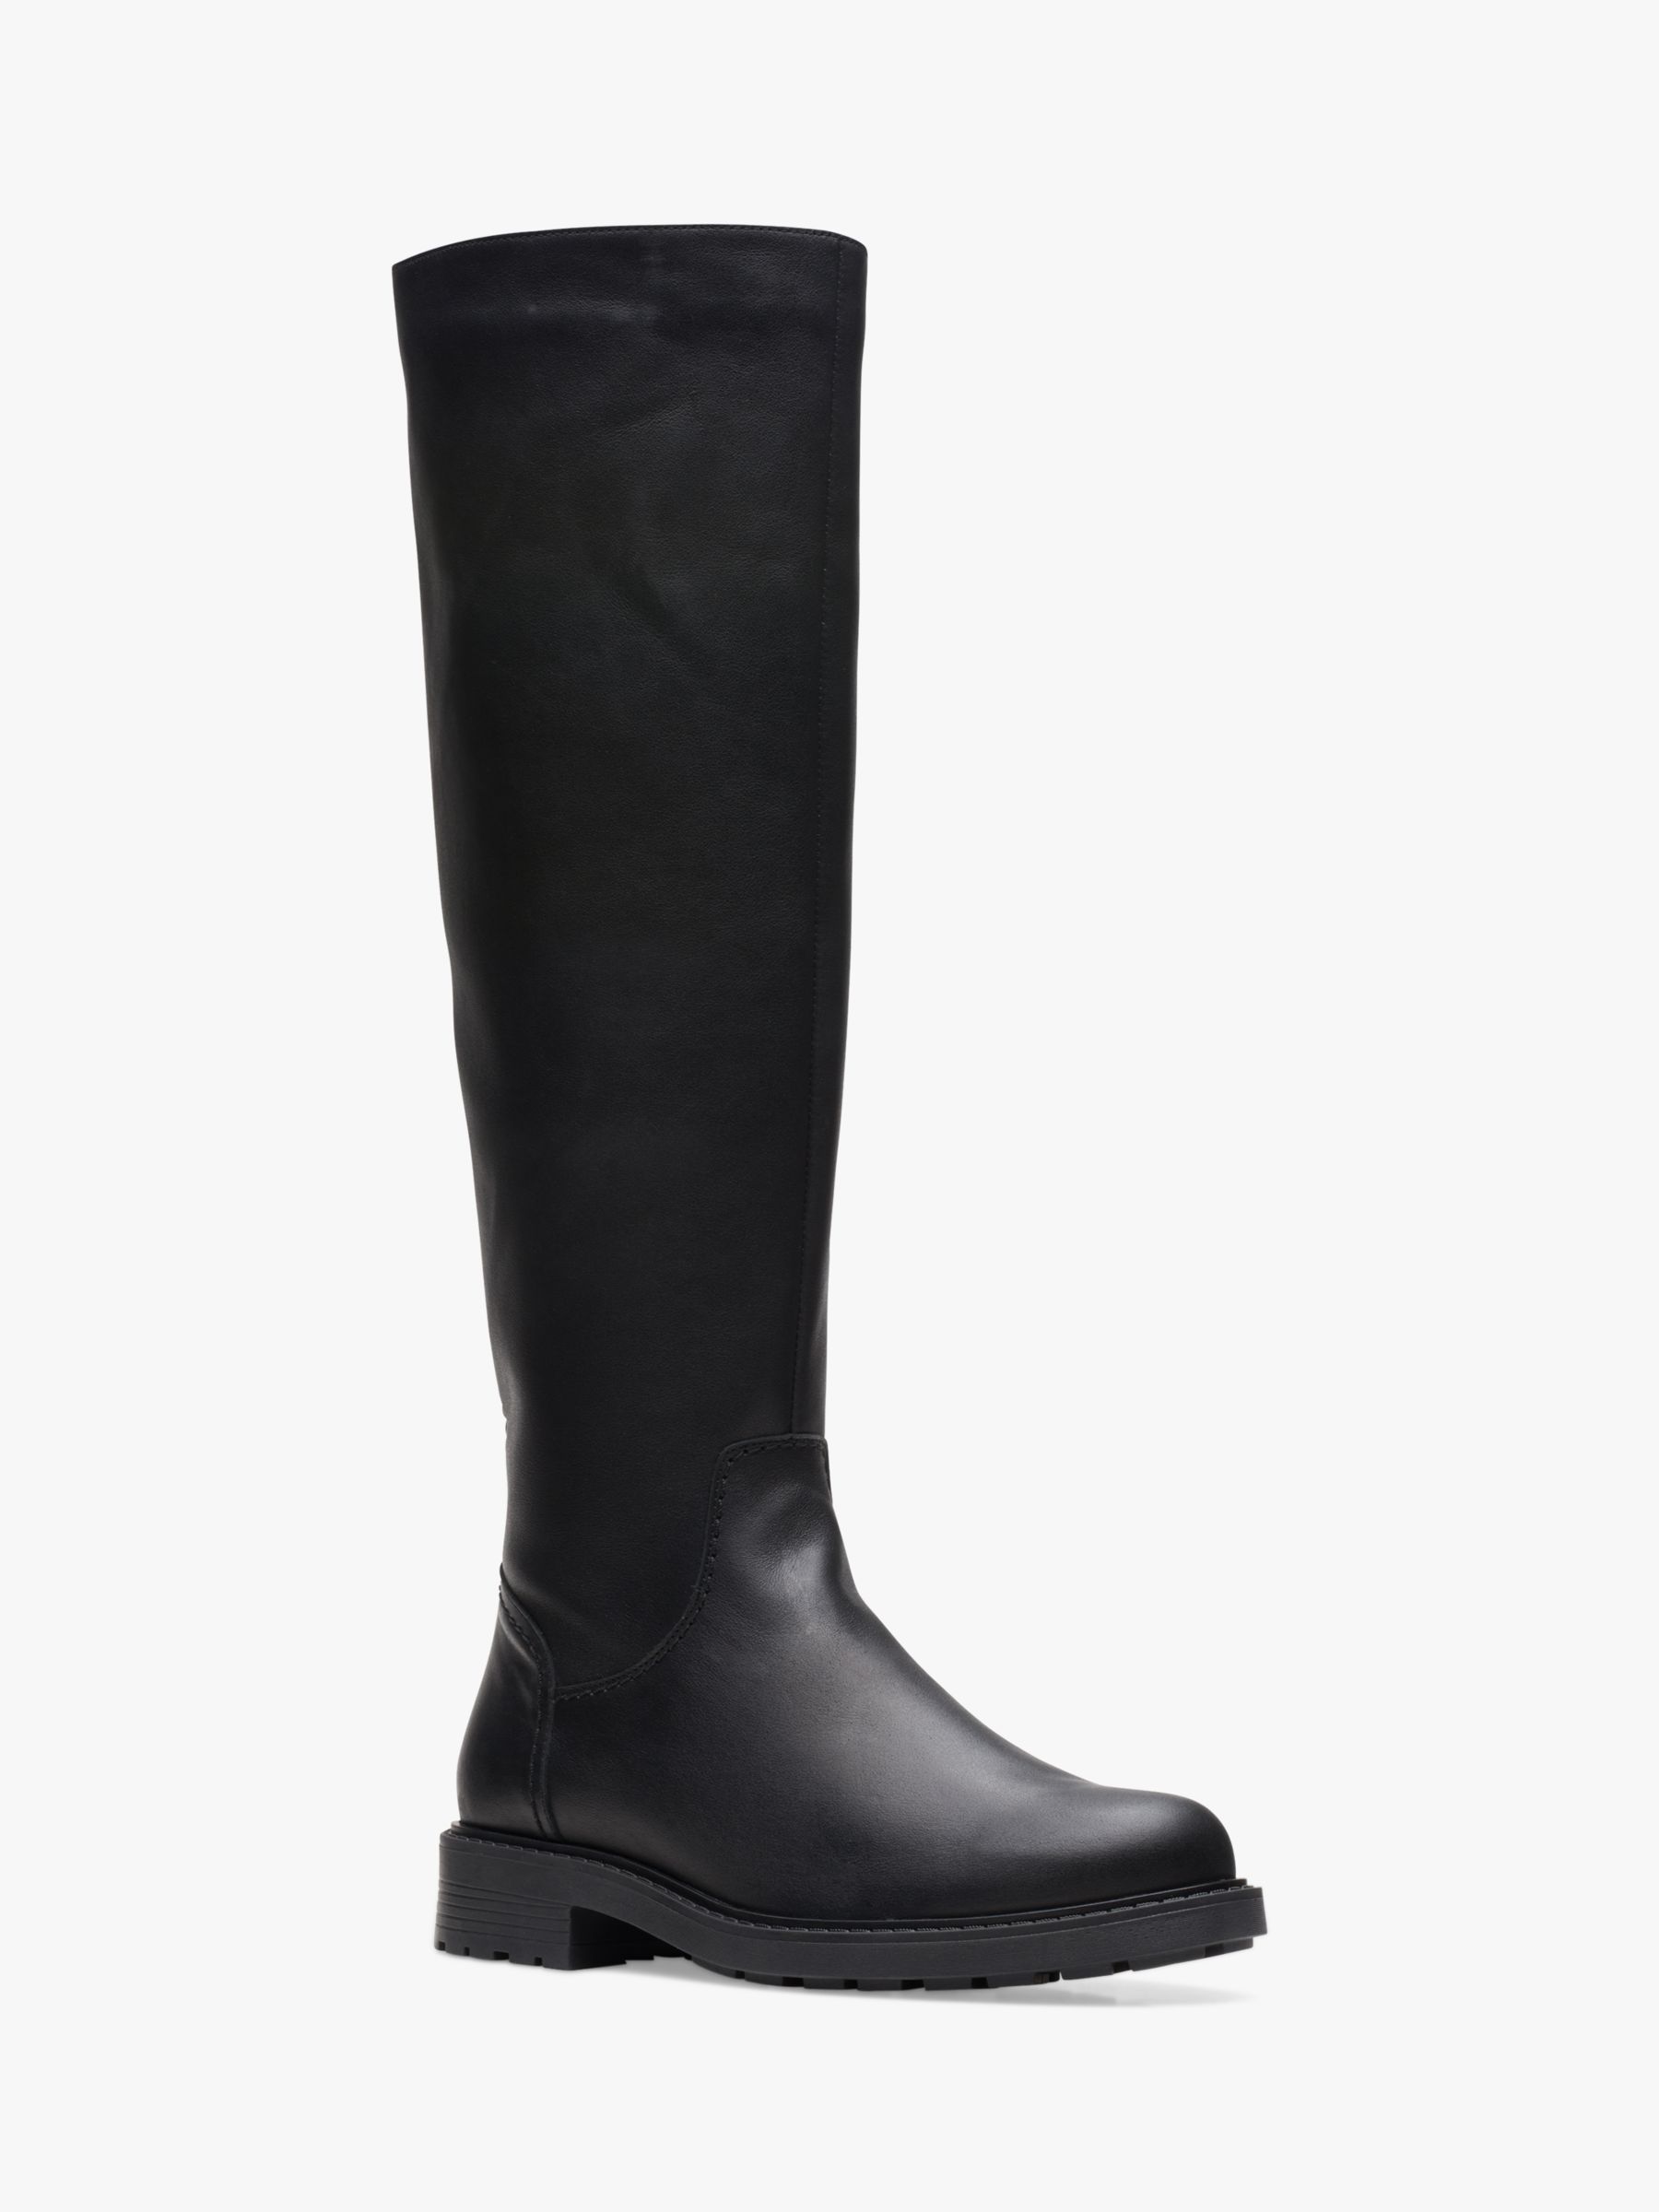 Clarks Orinoco 2 Leather Long Boots, Black, 3